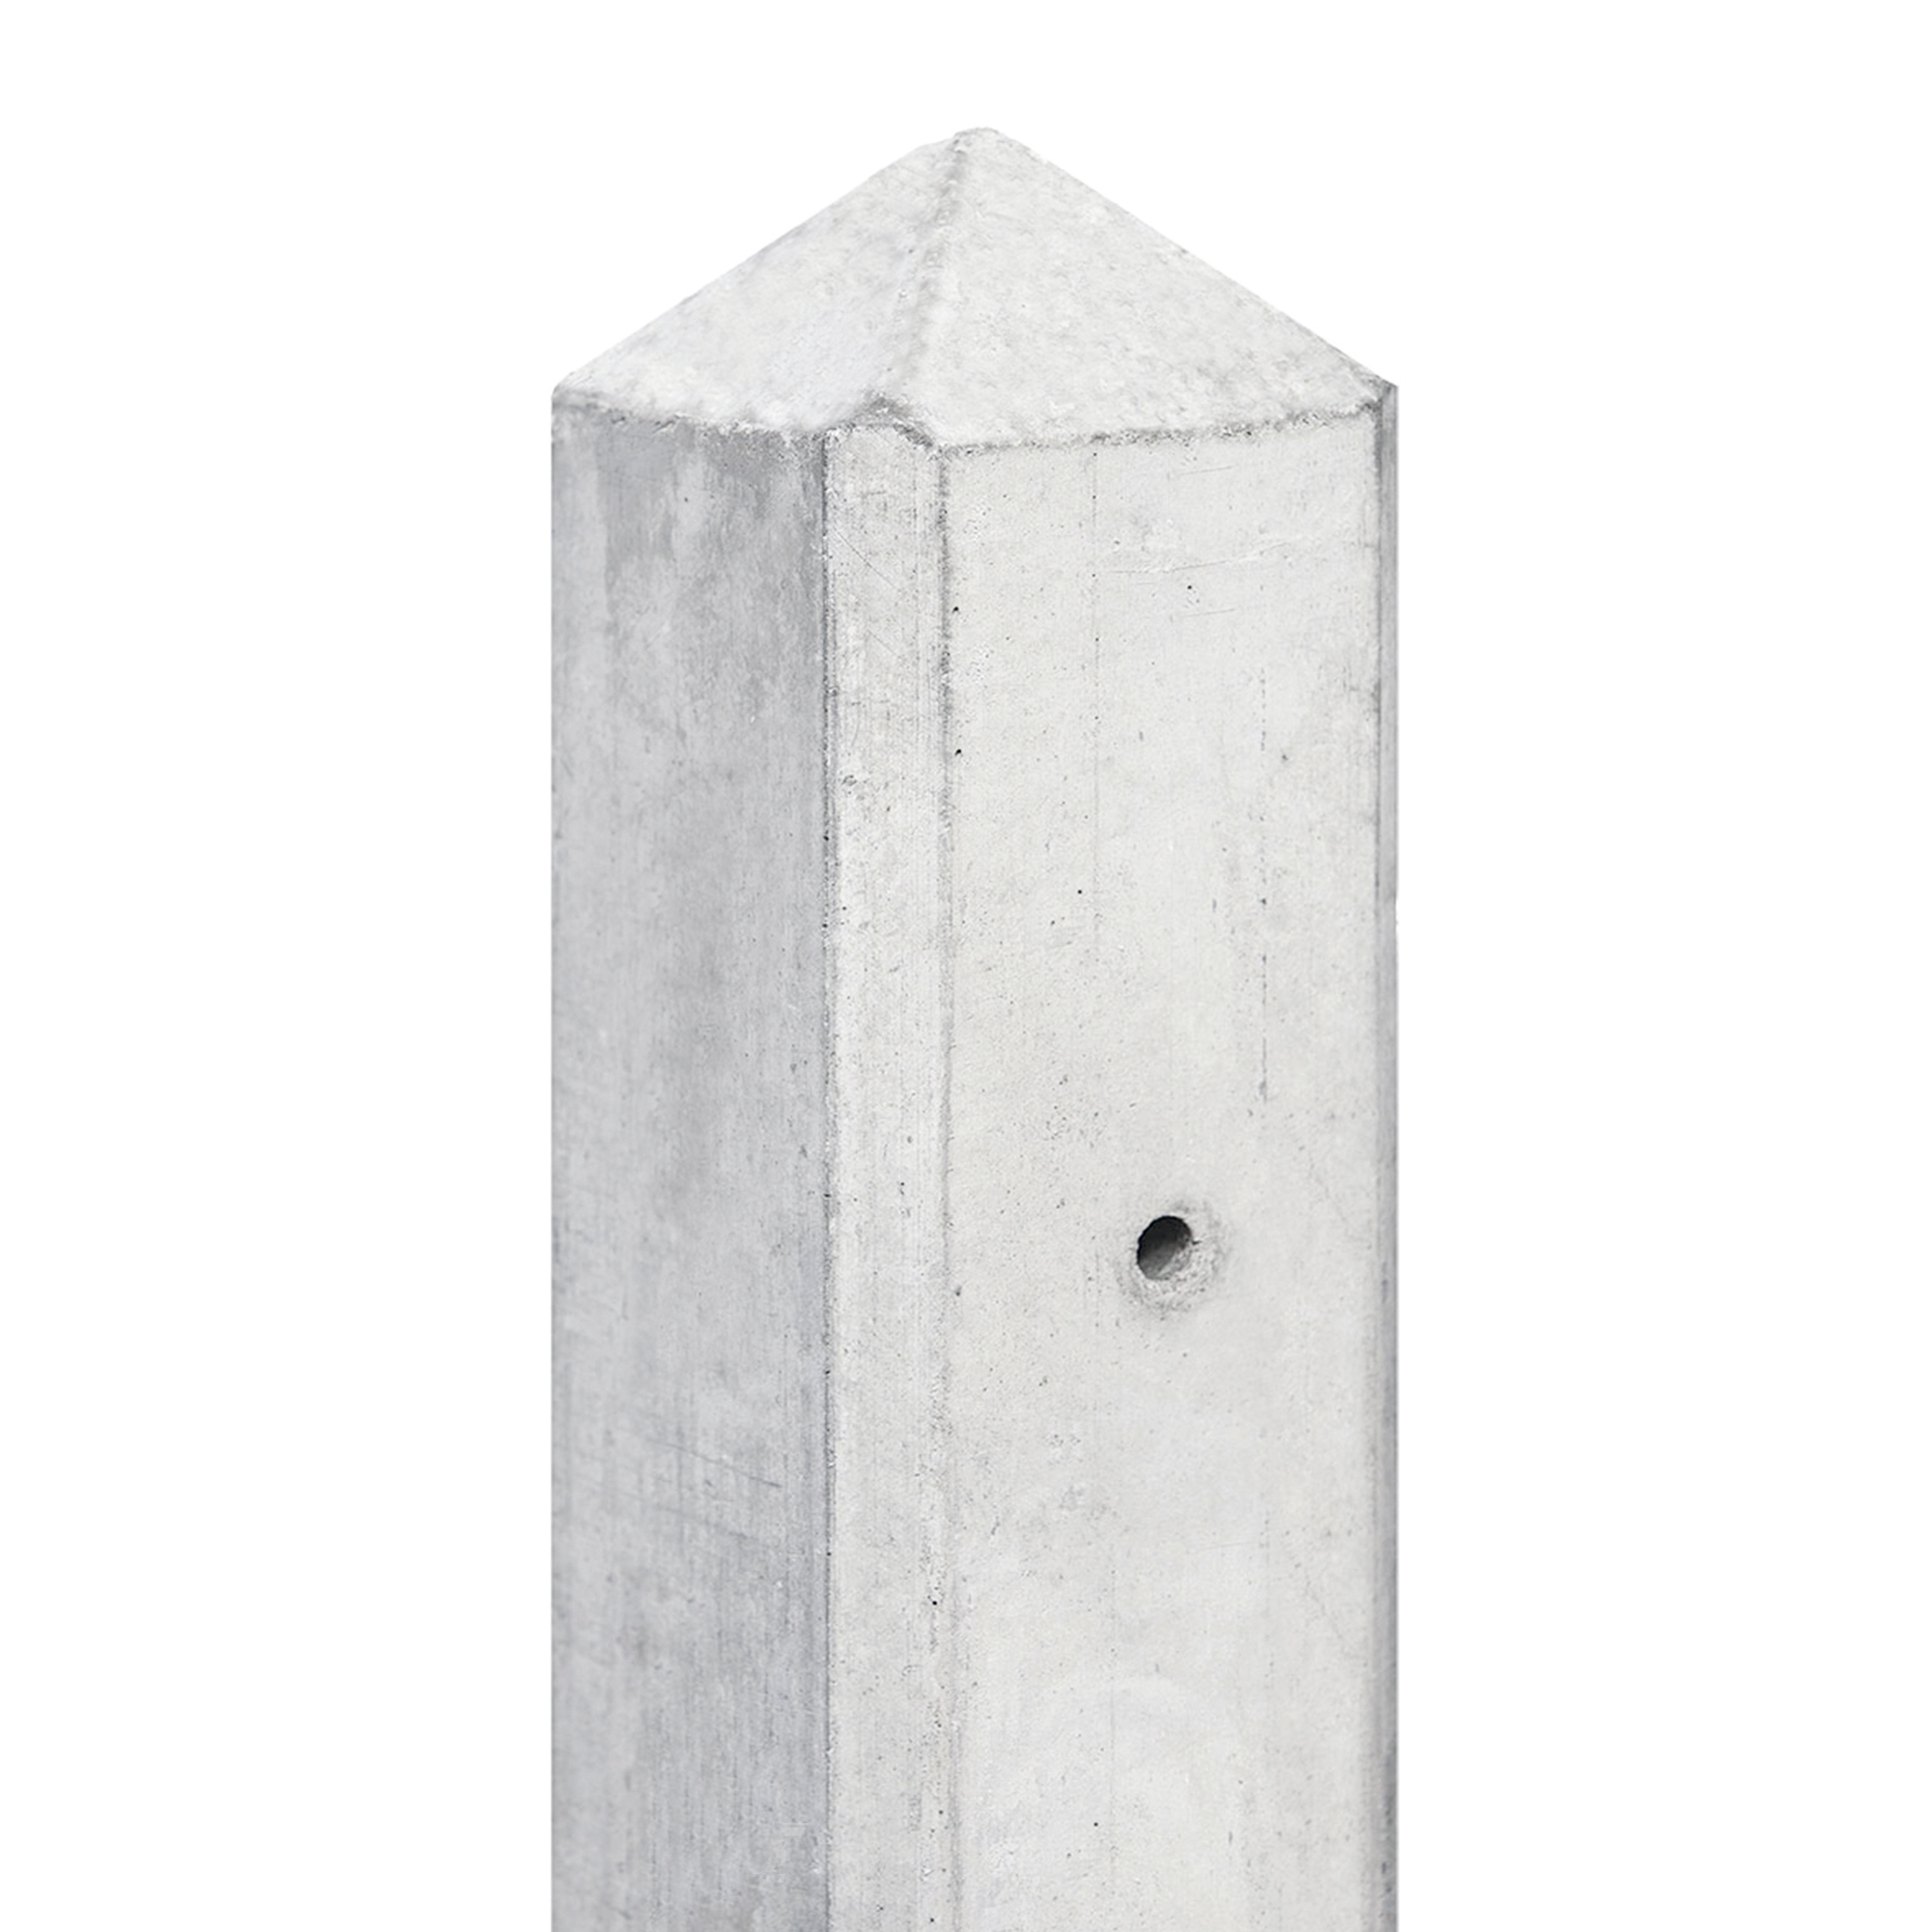 Hout-betonsysteem Schie wit /grijs